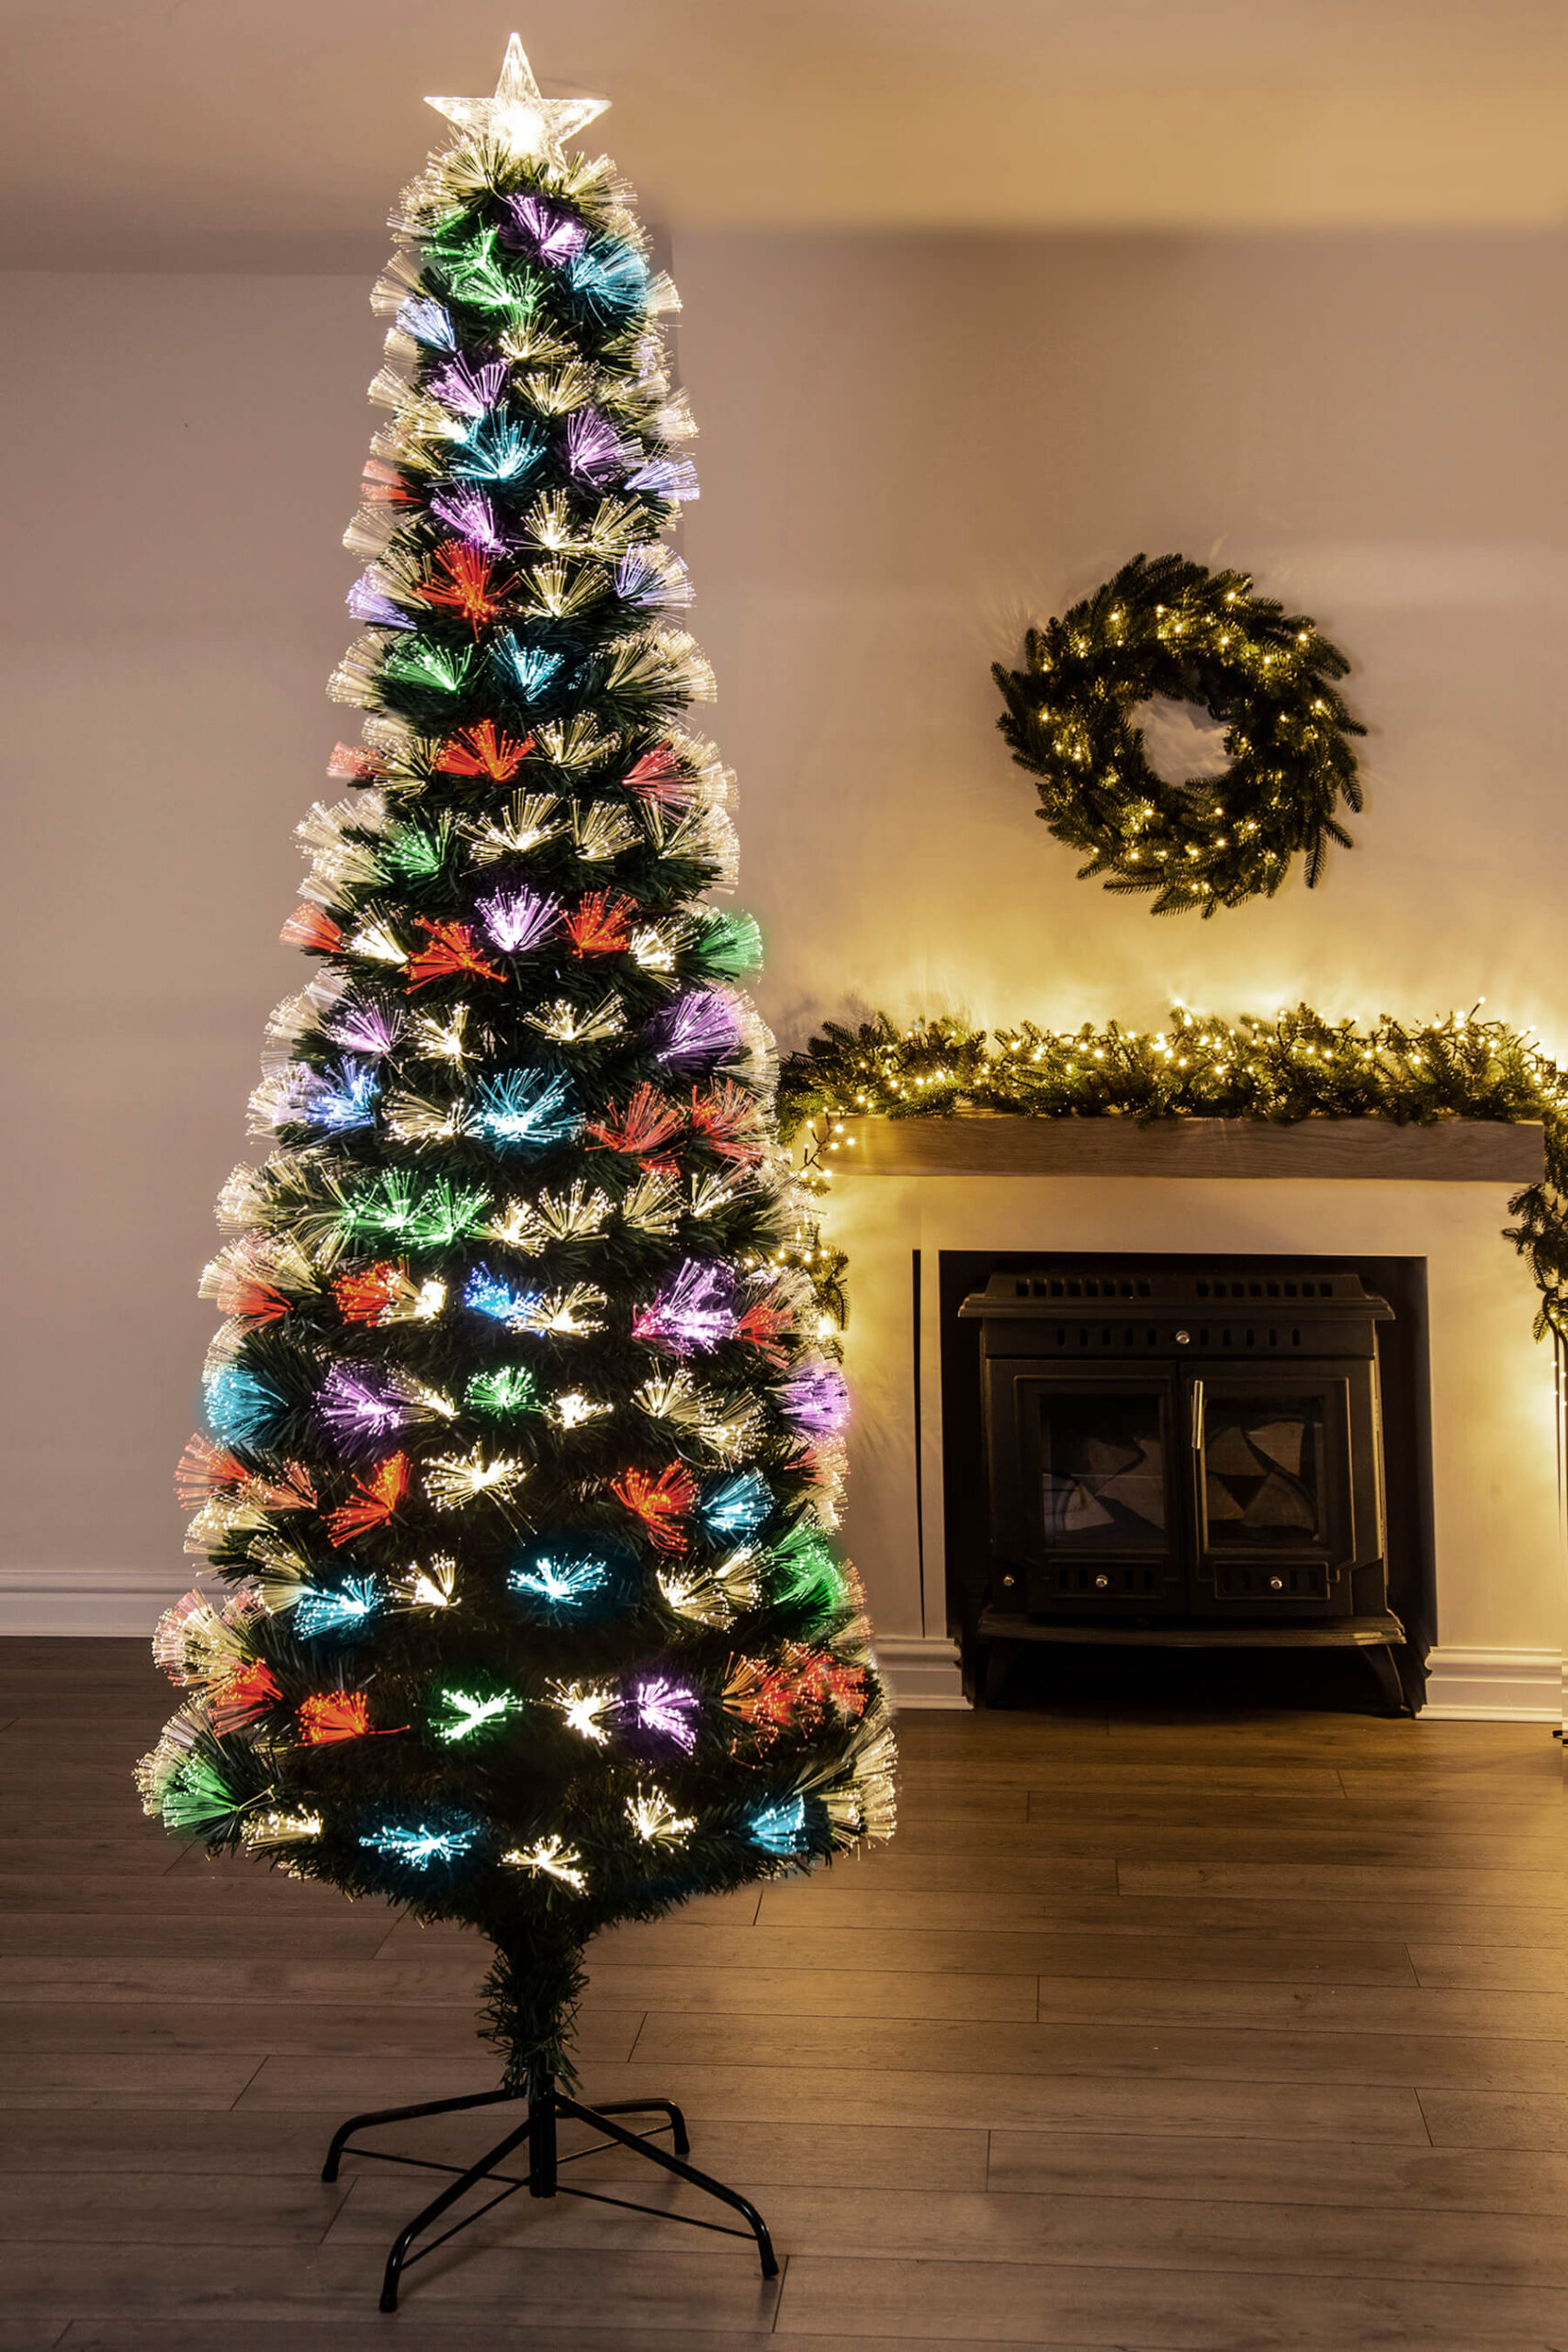 Where To Buy Fiber Optic Christmas Trees?